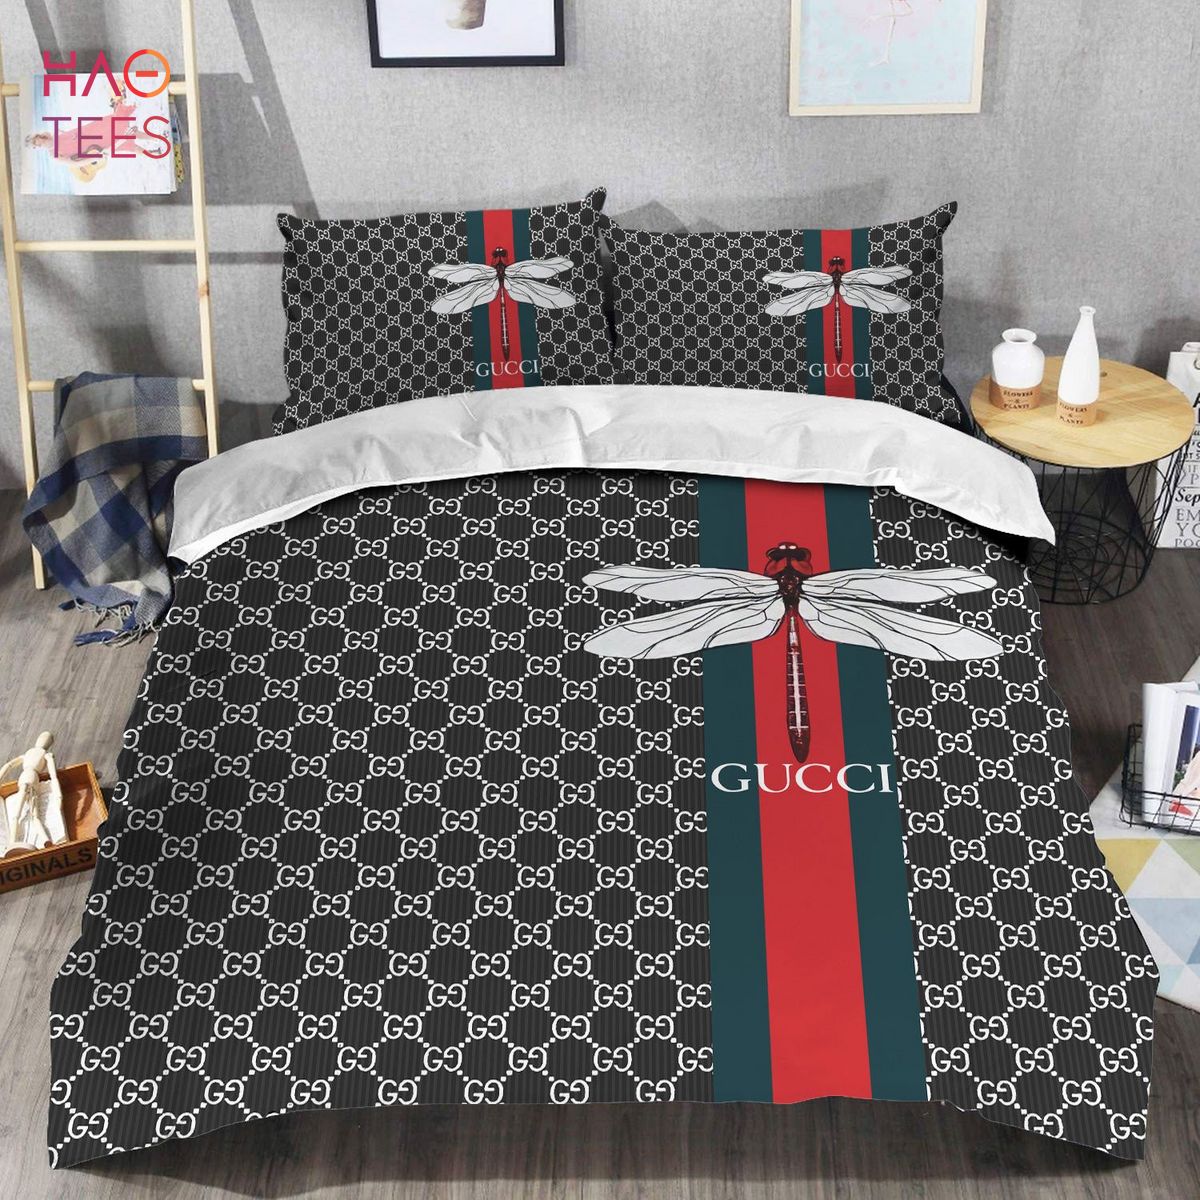 Dragonfly Gucci Luxury Brand Bedding Sets POD Design